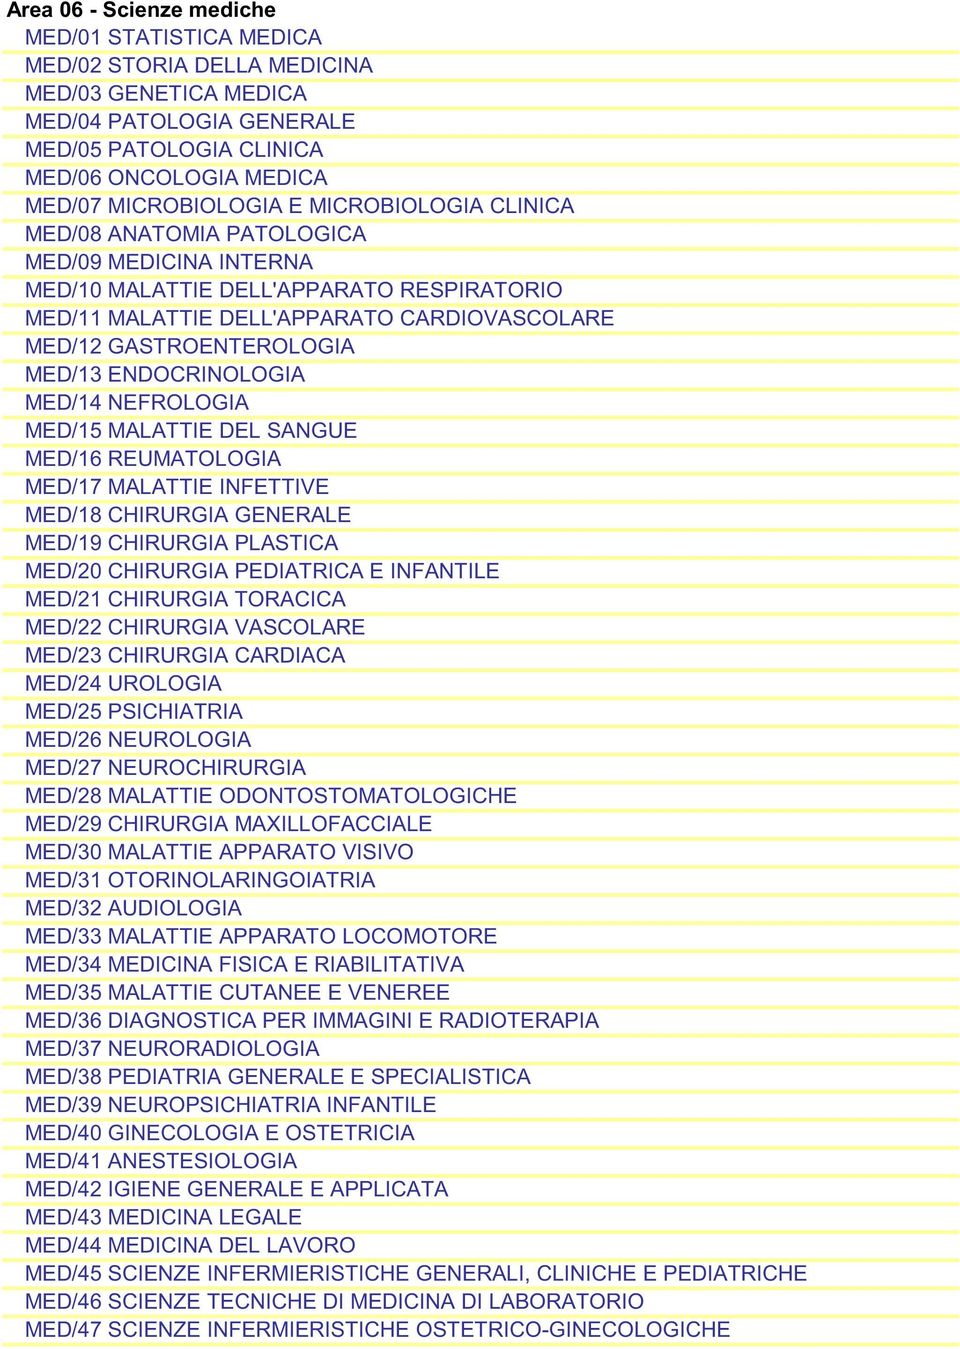 ENDOCRINOLOGIA MED/14 NEFROLOGIA MED/15 MALATTIE DEL SANGUE MED/16 REUMATOLOGIA MED/17 MALATTIE INFETTIVE MED/18 CHIRURGIA GENERALE MED/19 CHIRURGIA PLASTICA MED/20 CHIRURGIA PEDIATRICA E INFANTILE